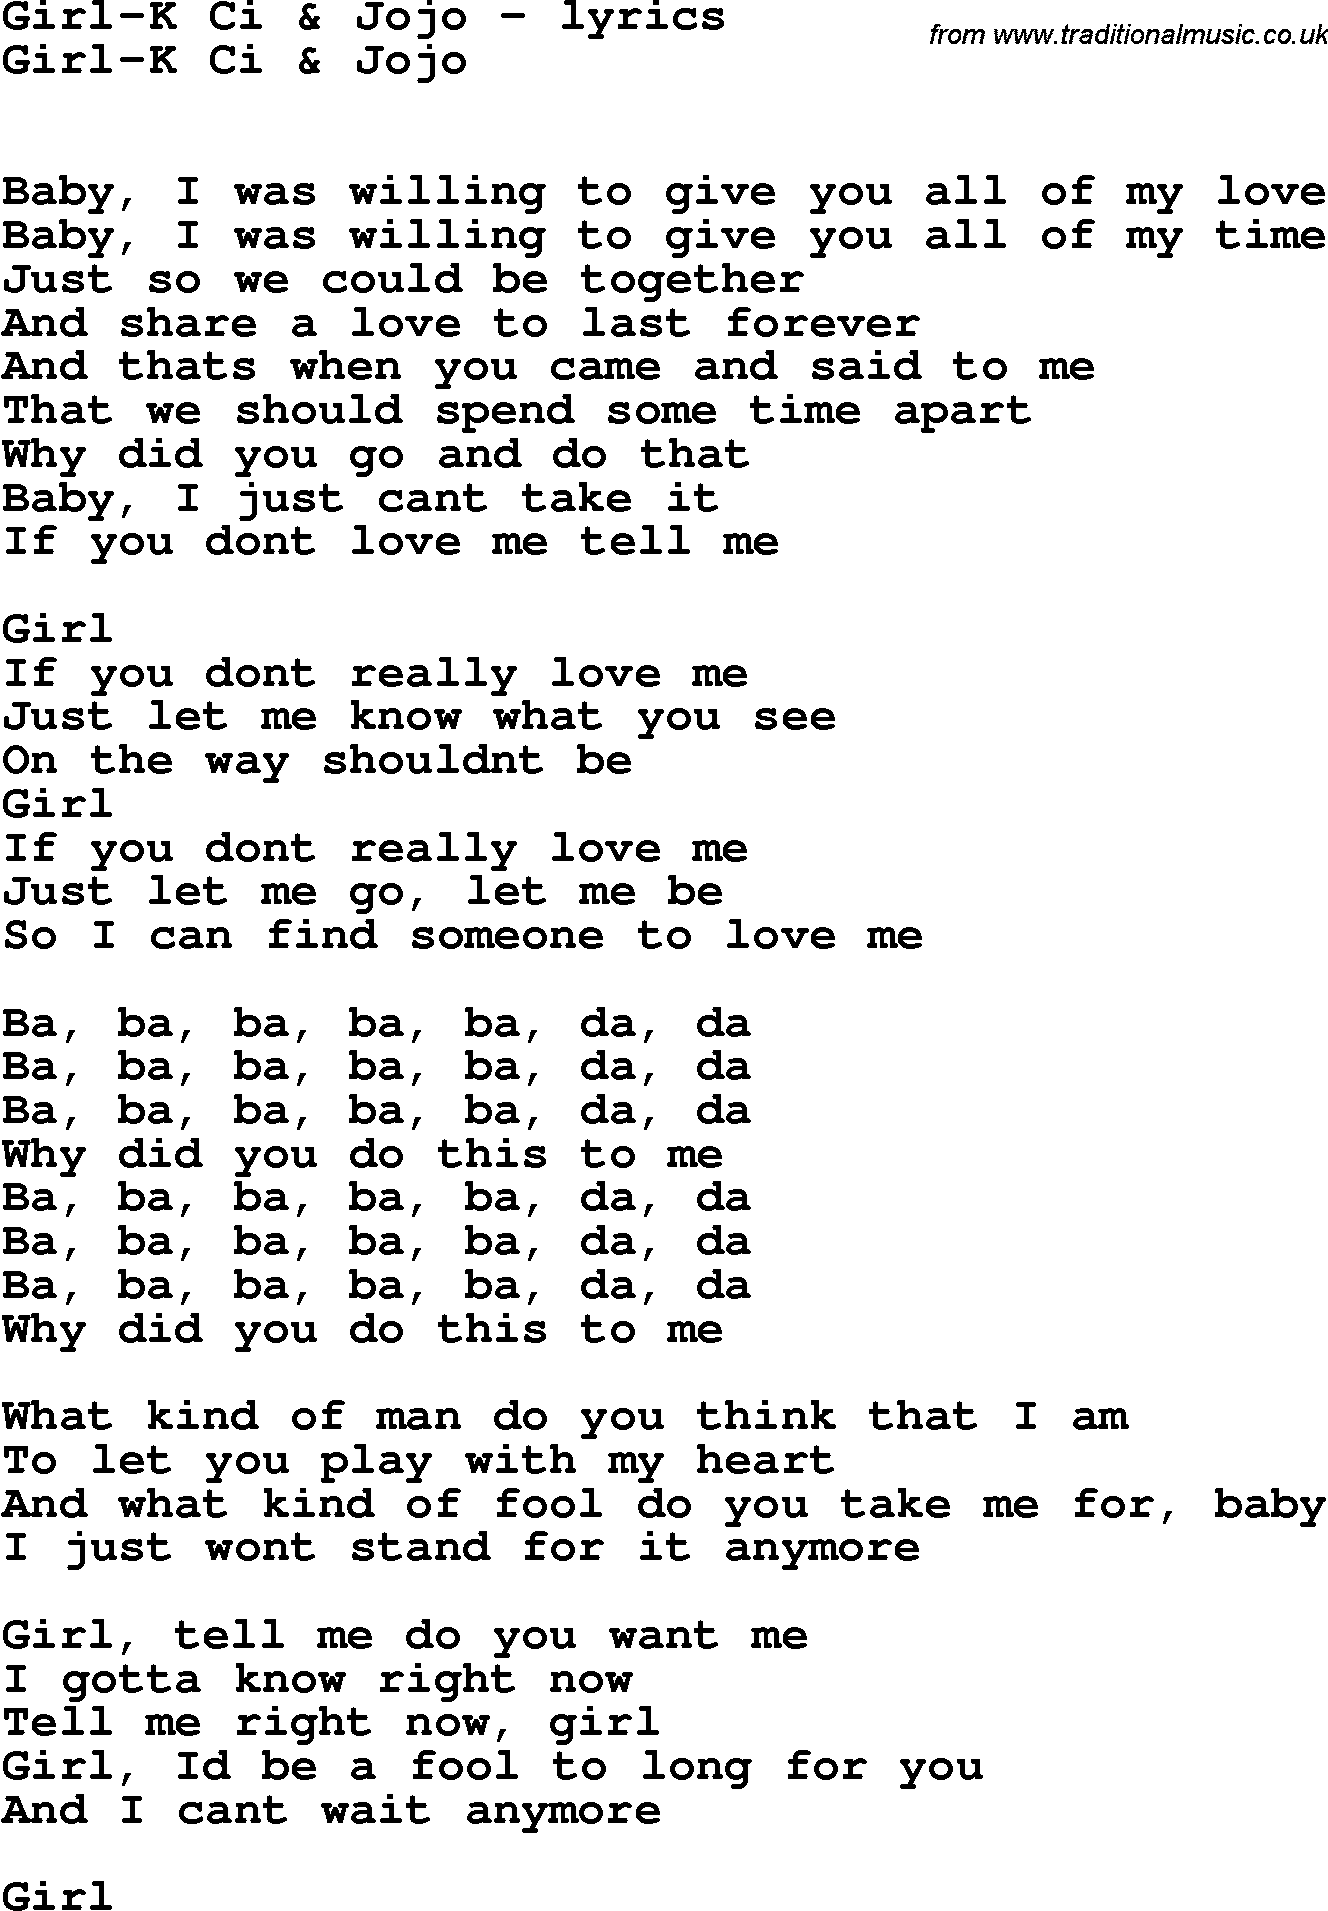 Love Song Lyrics for: Girl-K Ci & Jojo